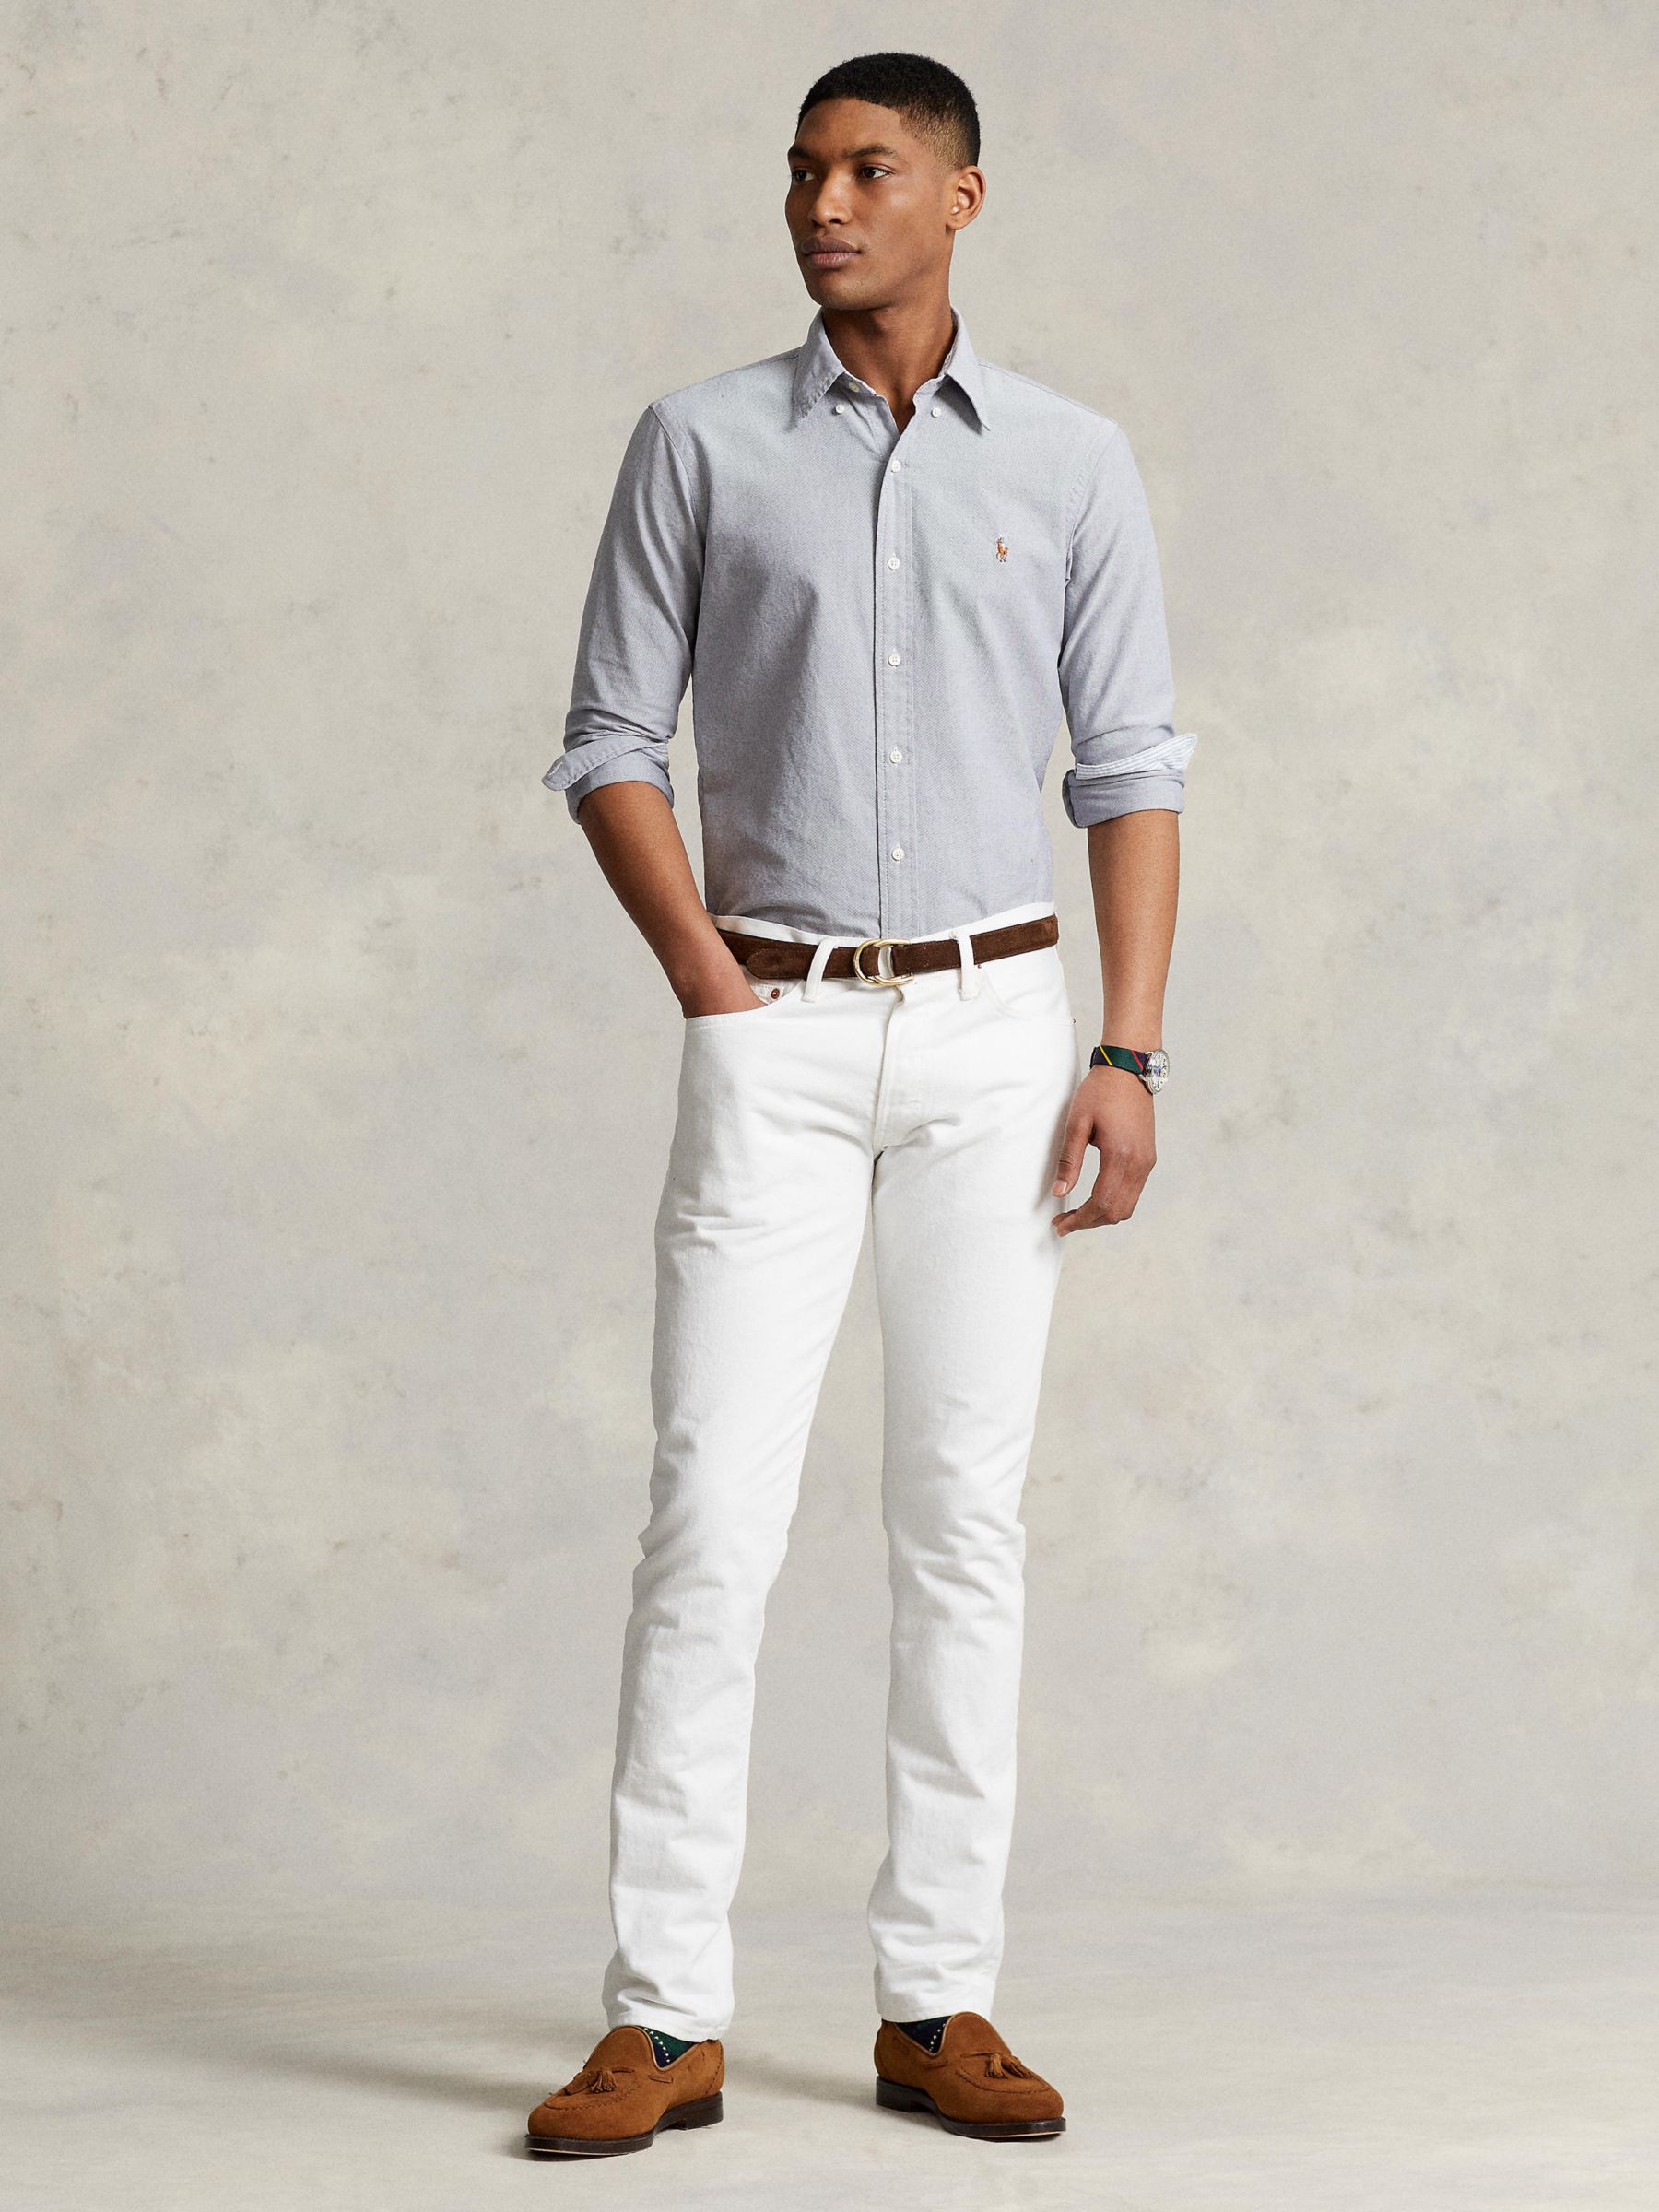 Polo by Ralph Lauren, Shirts, Polo Ralph Lauren Polo Shirt Multi Colored  M Custom Slim Fit